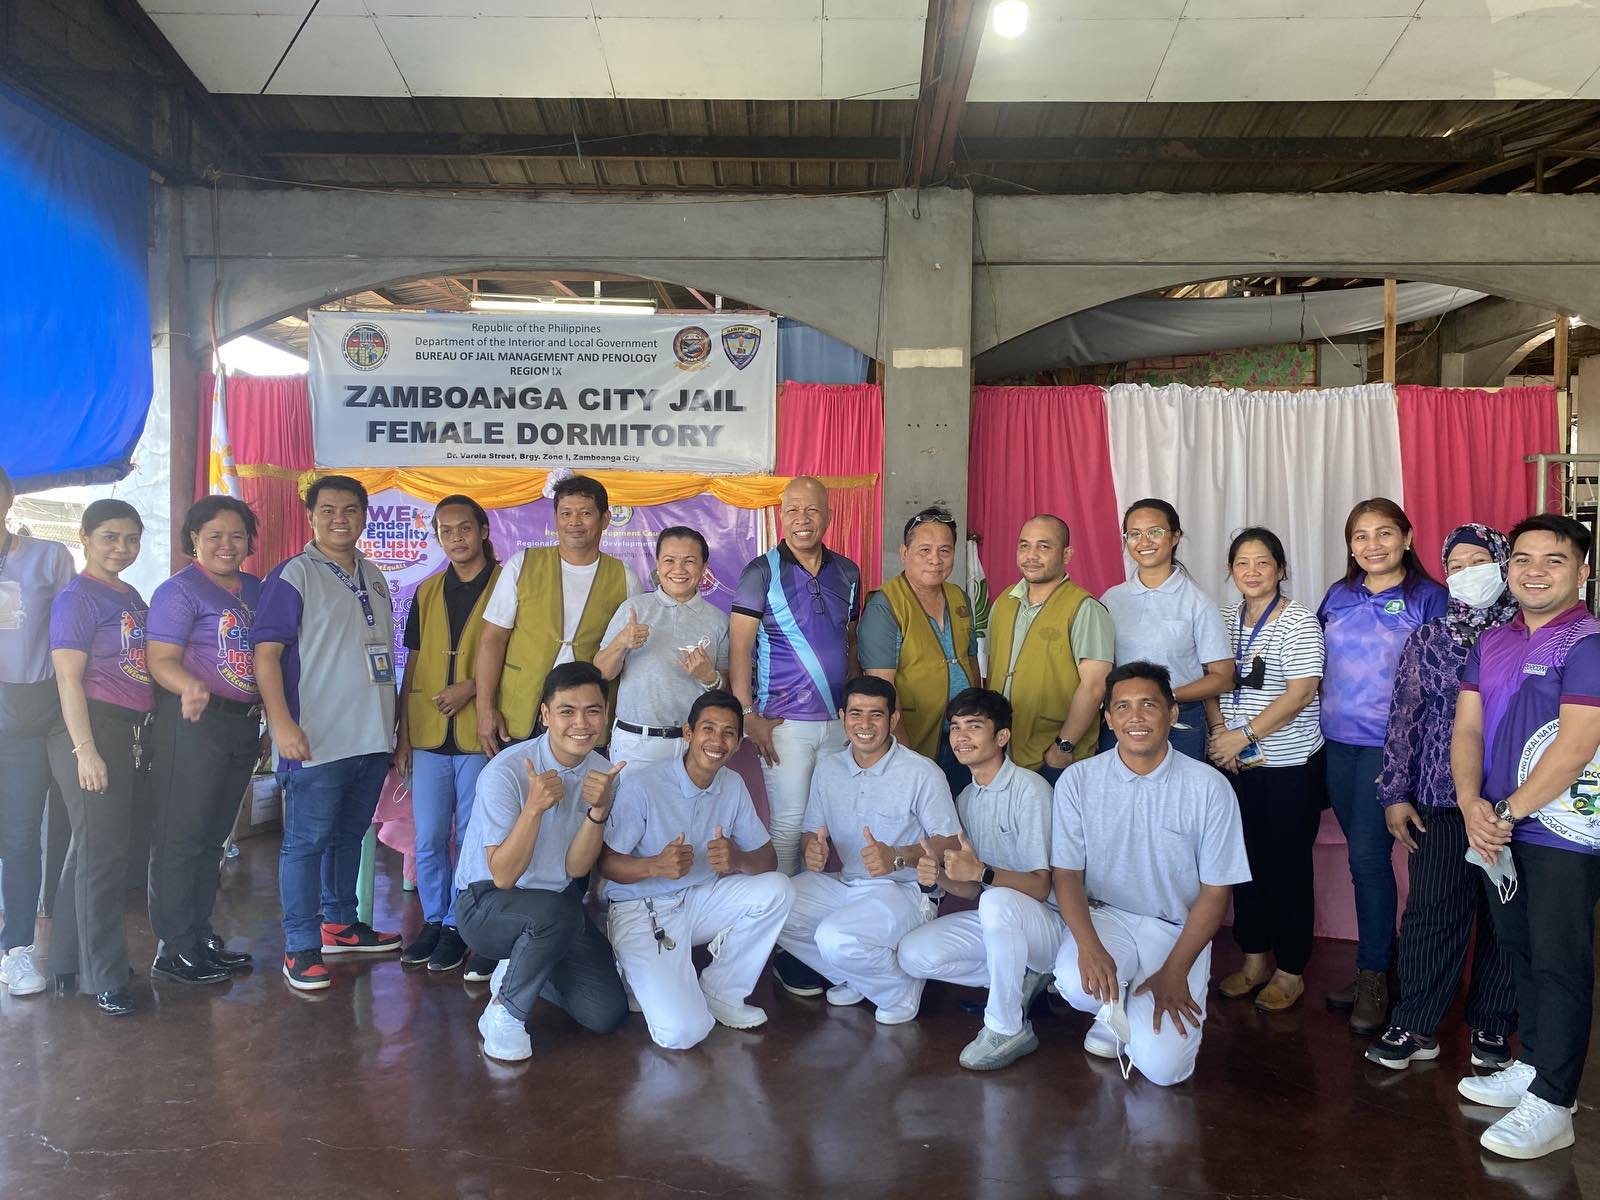 Volunteers from Tzu Chi Zamboanga and the Regional Gender and Development Committee of the Regional Development Council (Region IX) join for a group photo.